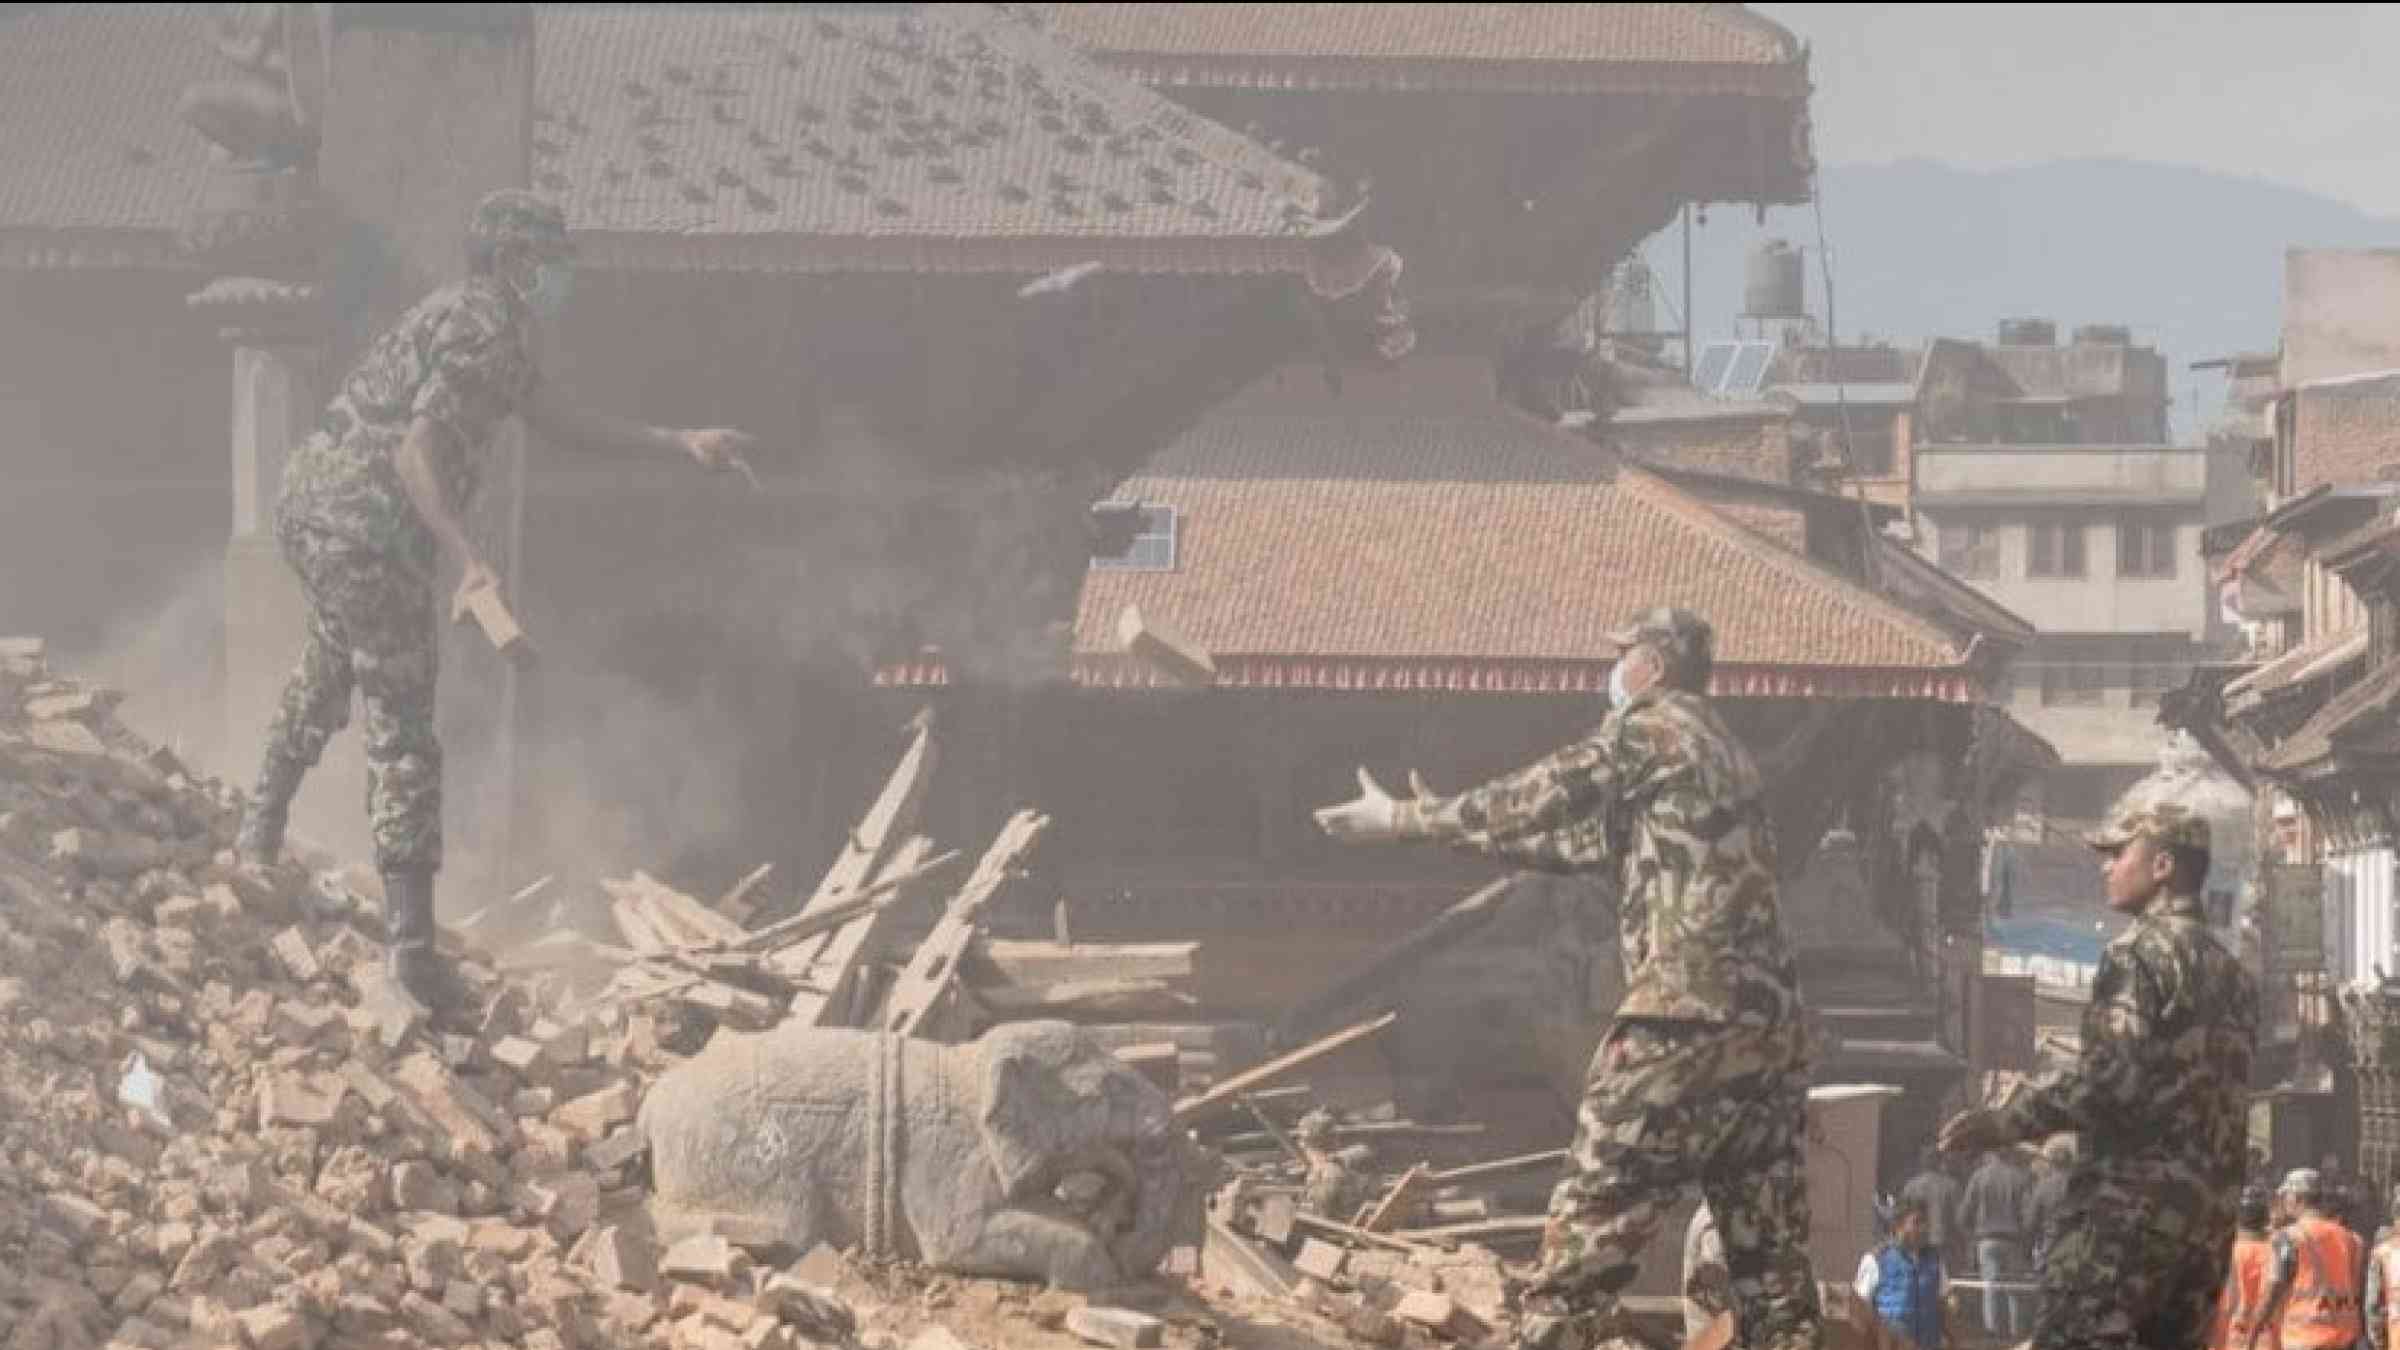 Nepal-earthquake-2015_gradatoion